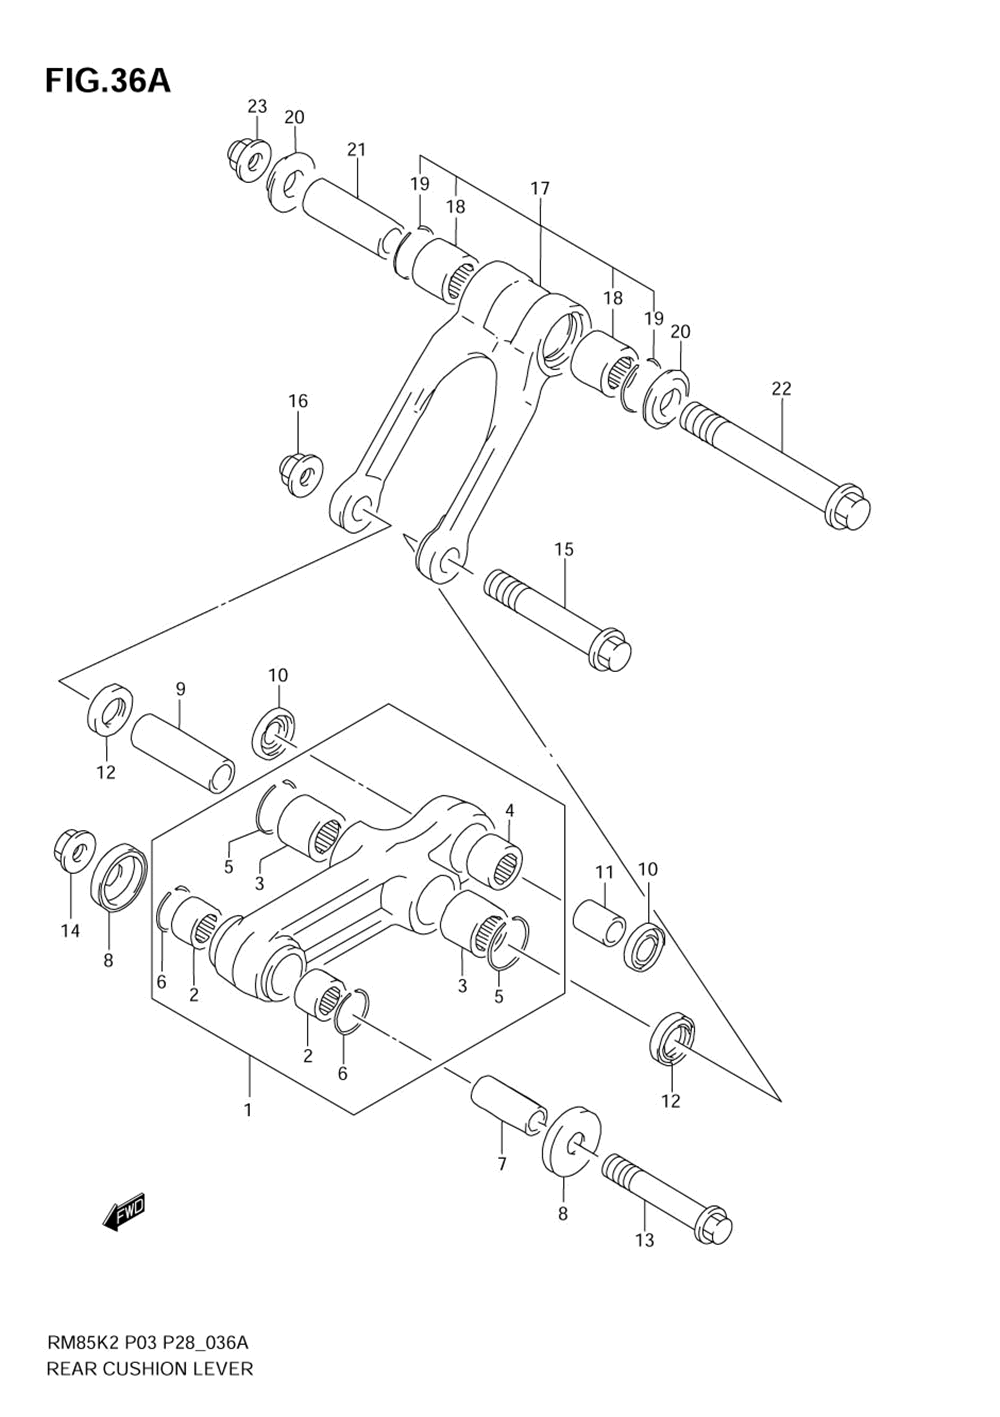 Rear cushion lever (model k4_k5_k6)